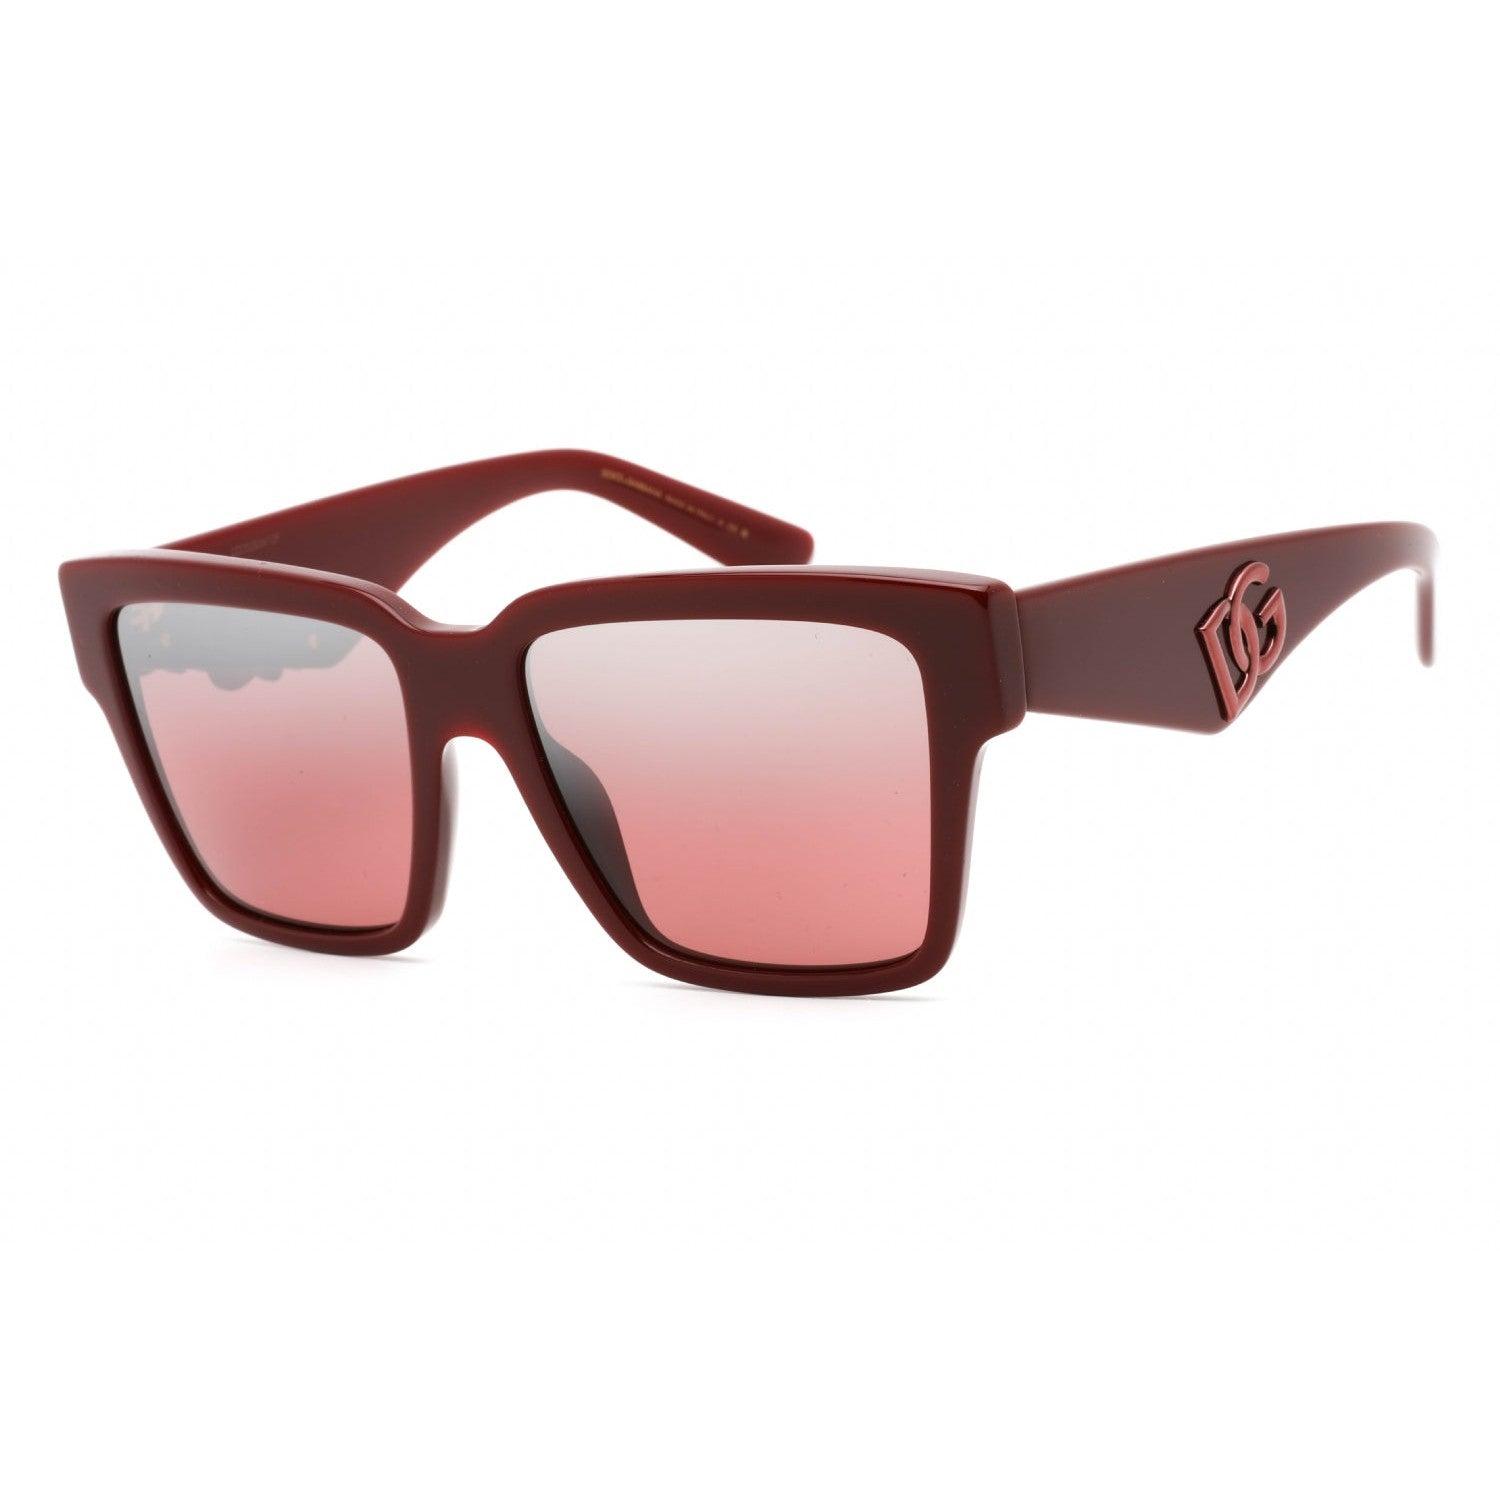 Dolce & Gabbana 0dg4436 Sunglasses Bordeaux / Pink Mirrored Silver Gradient